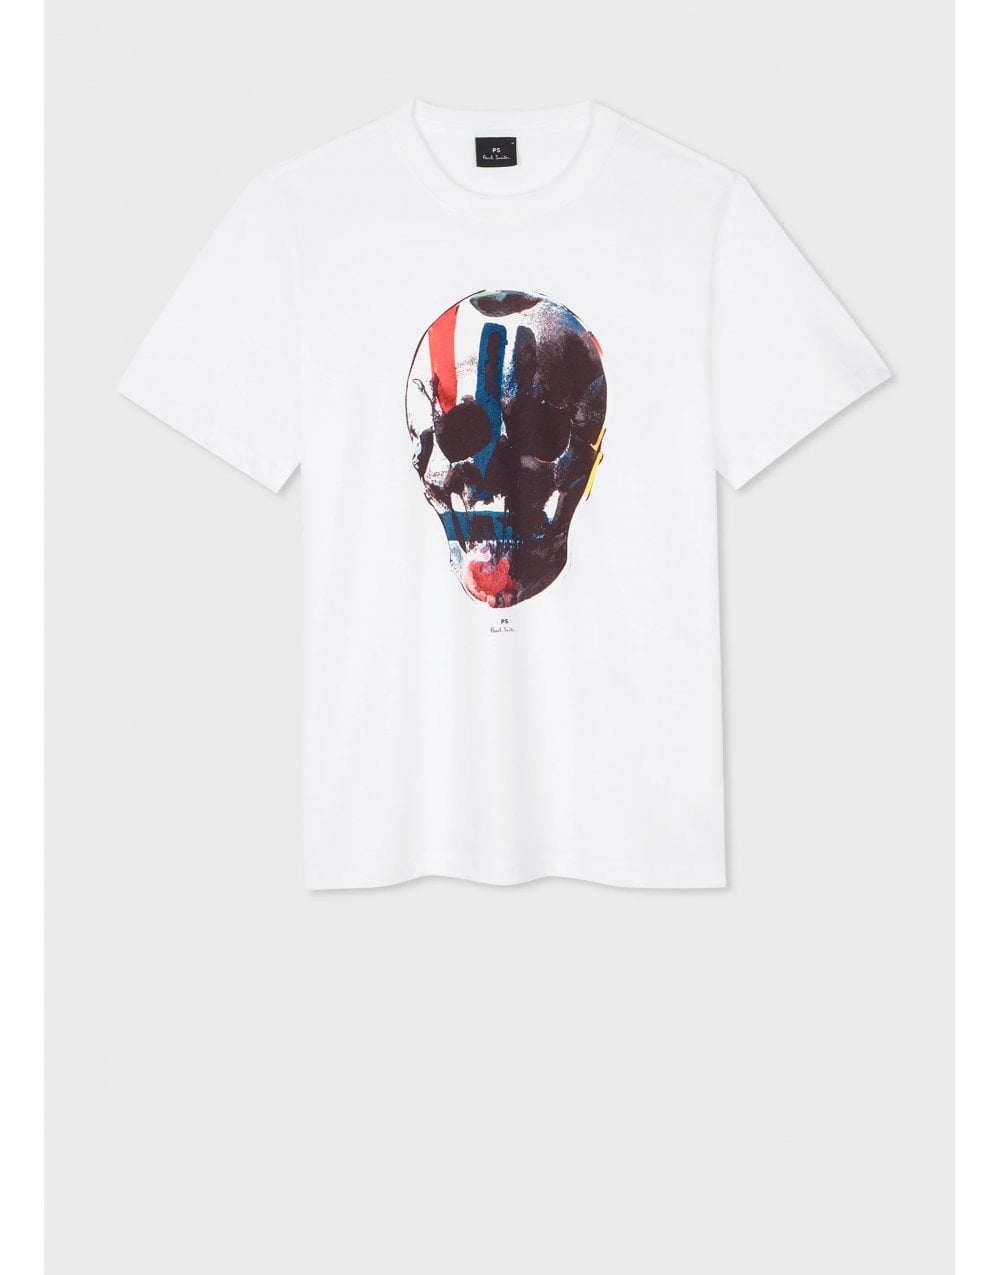 Paul Smith Paul Smith Multicolour Skull Graphic T-shirt Col: 01 White, Size: L